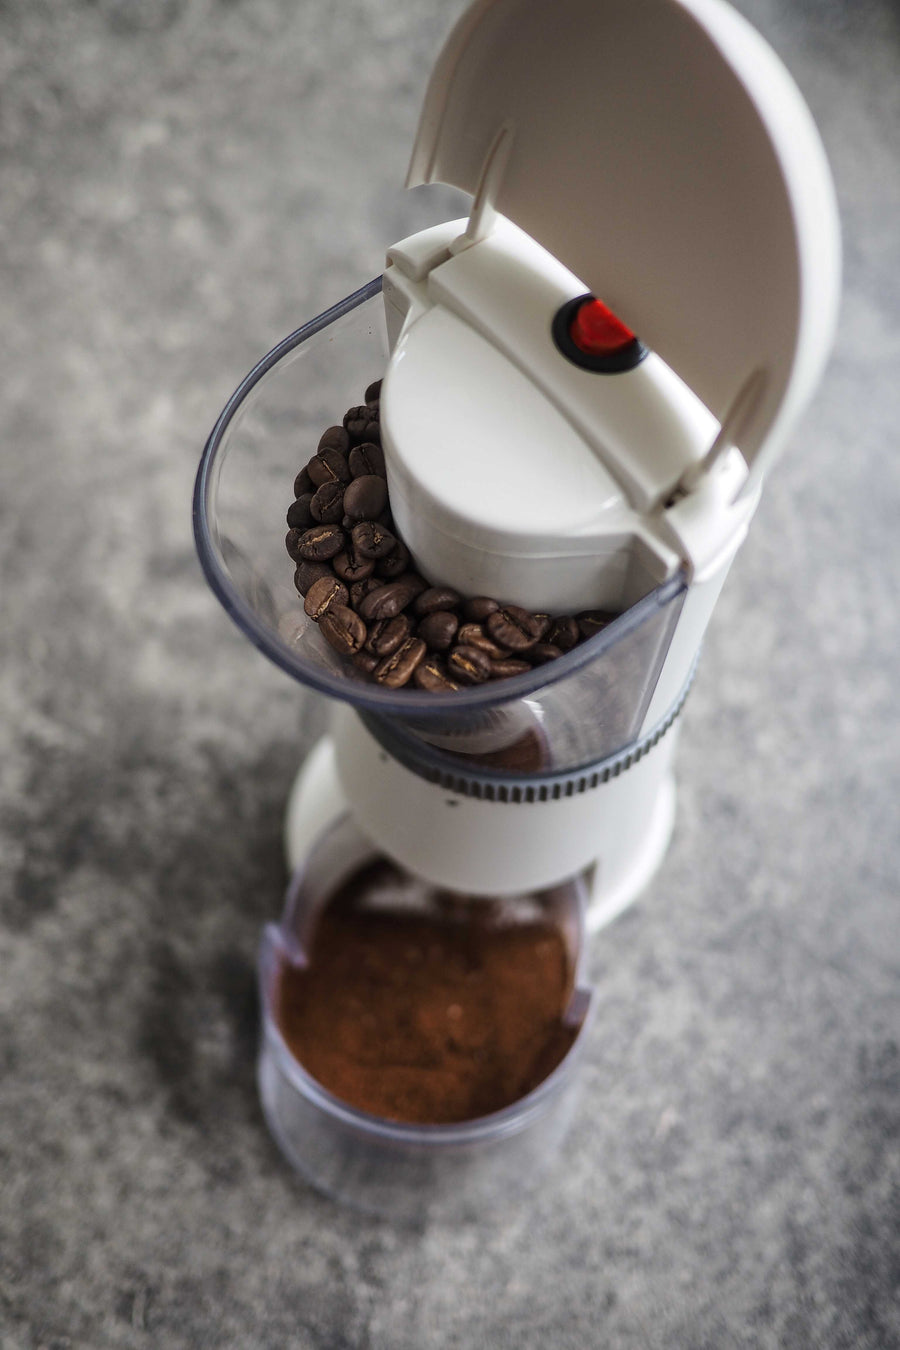 PUREFRESH PRO ELECTRIC COFFEE GRINDER (ESPRESSO & FILTER GRIND)